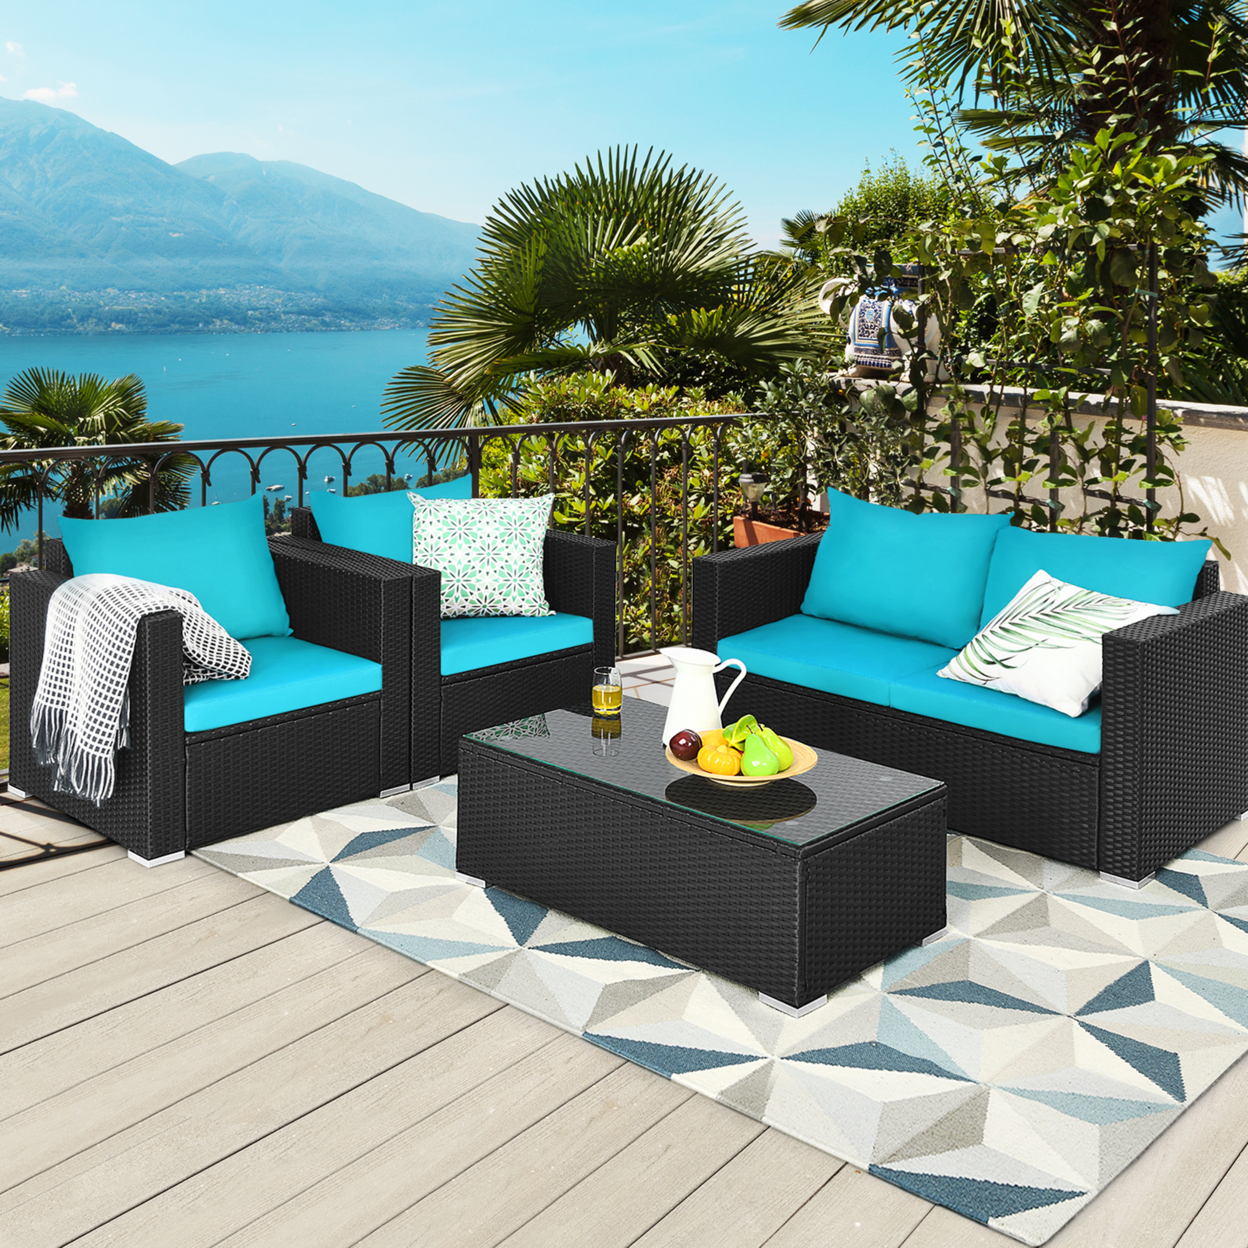 4PCS Rattan Patio Conversation Set Outdoor Furniture Set W/ Cushions - Turquoise